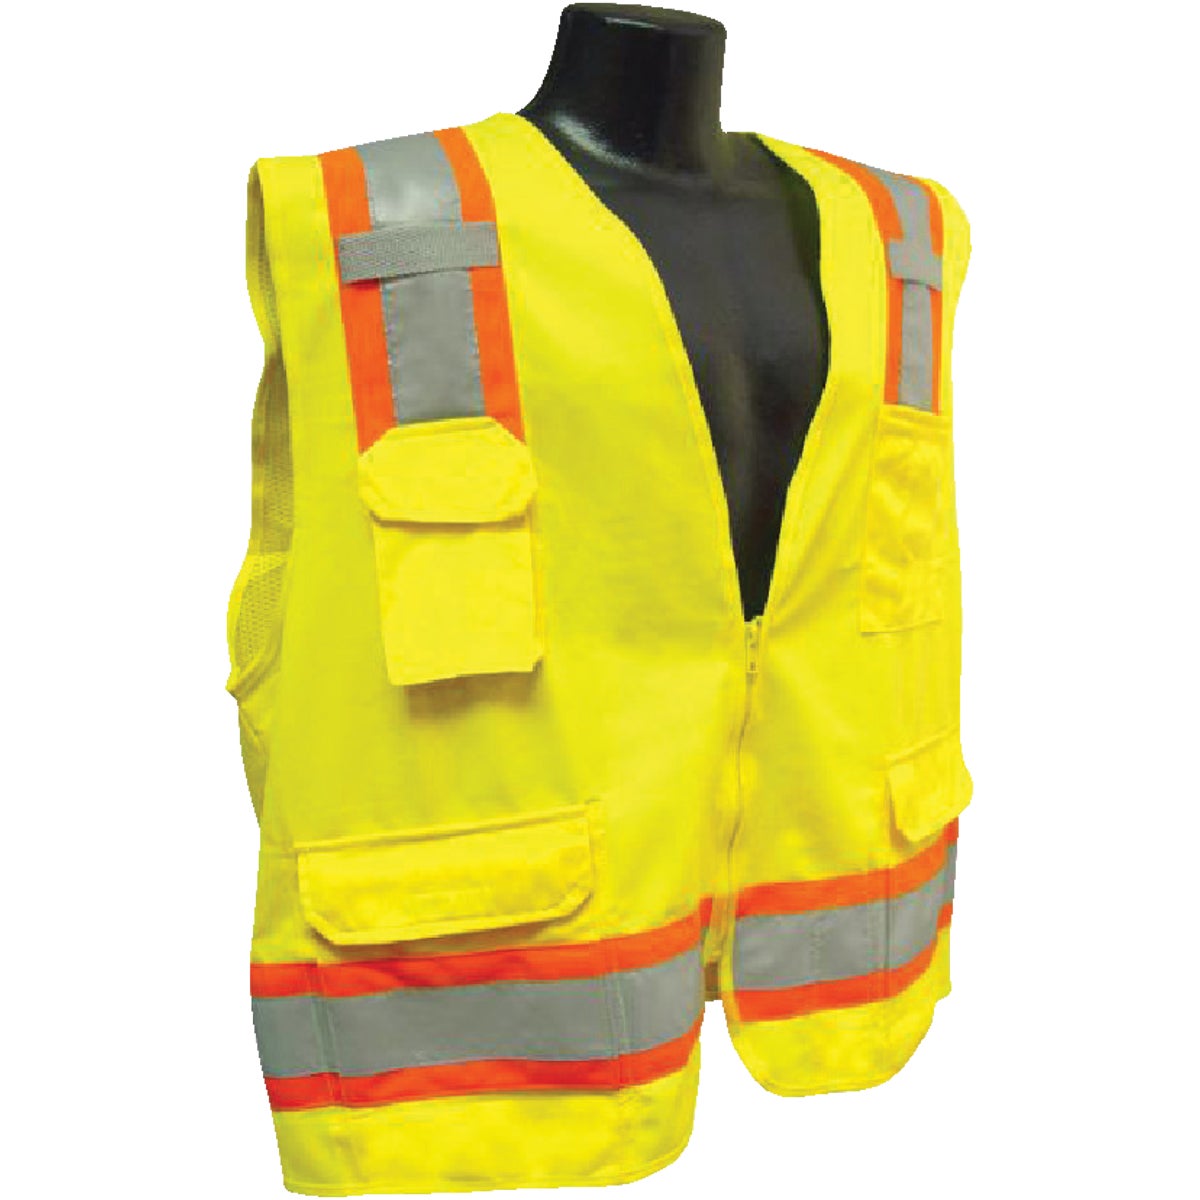 Item 701982, Hi visibility Class 2 Type R solid surveyors safety vest.